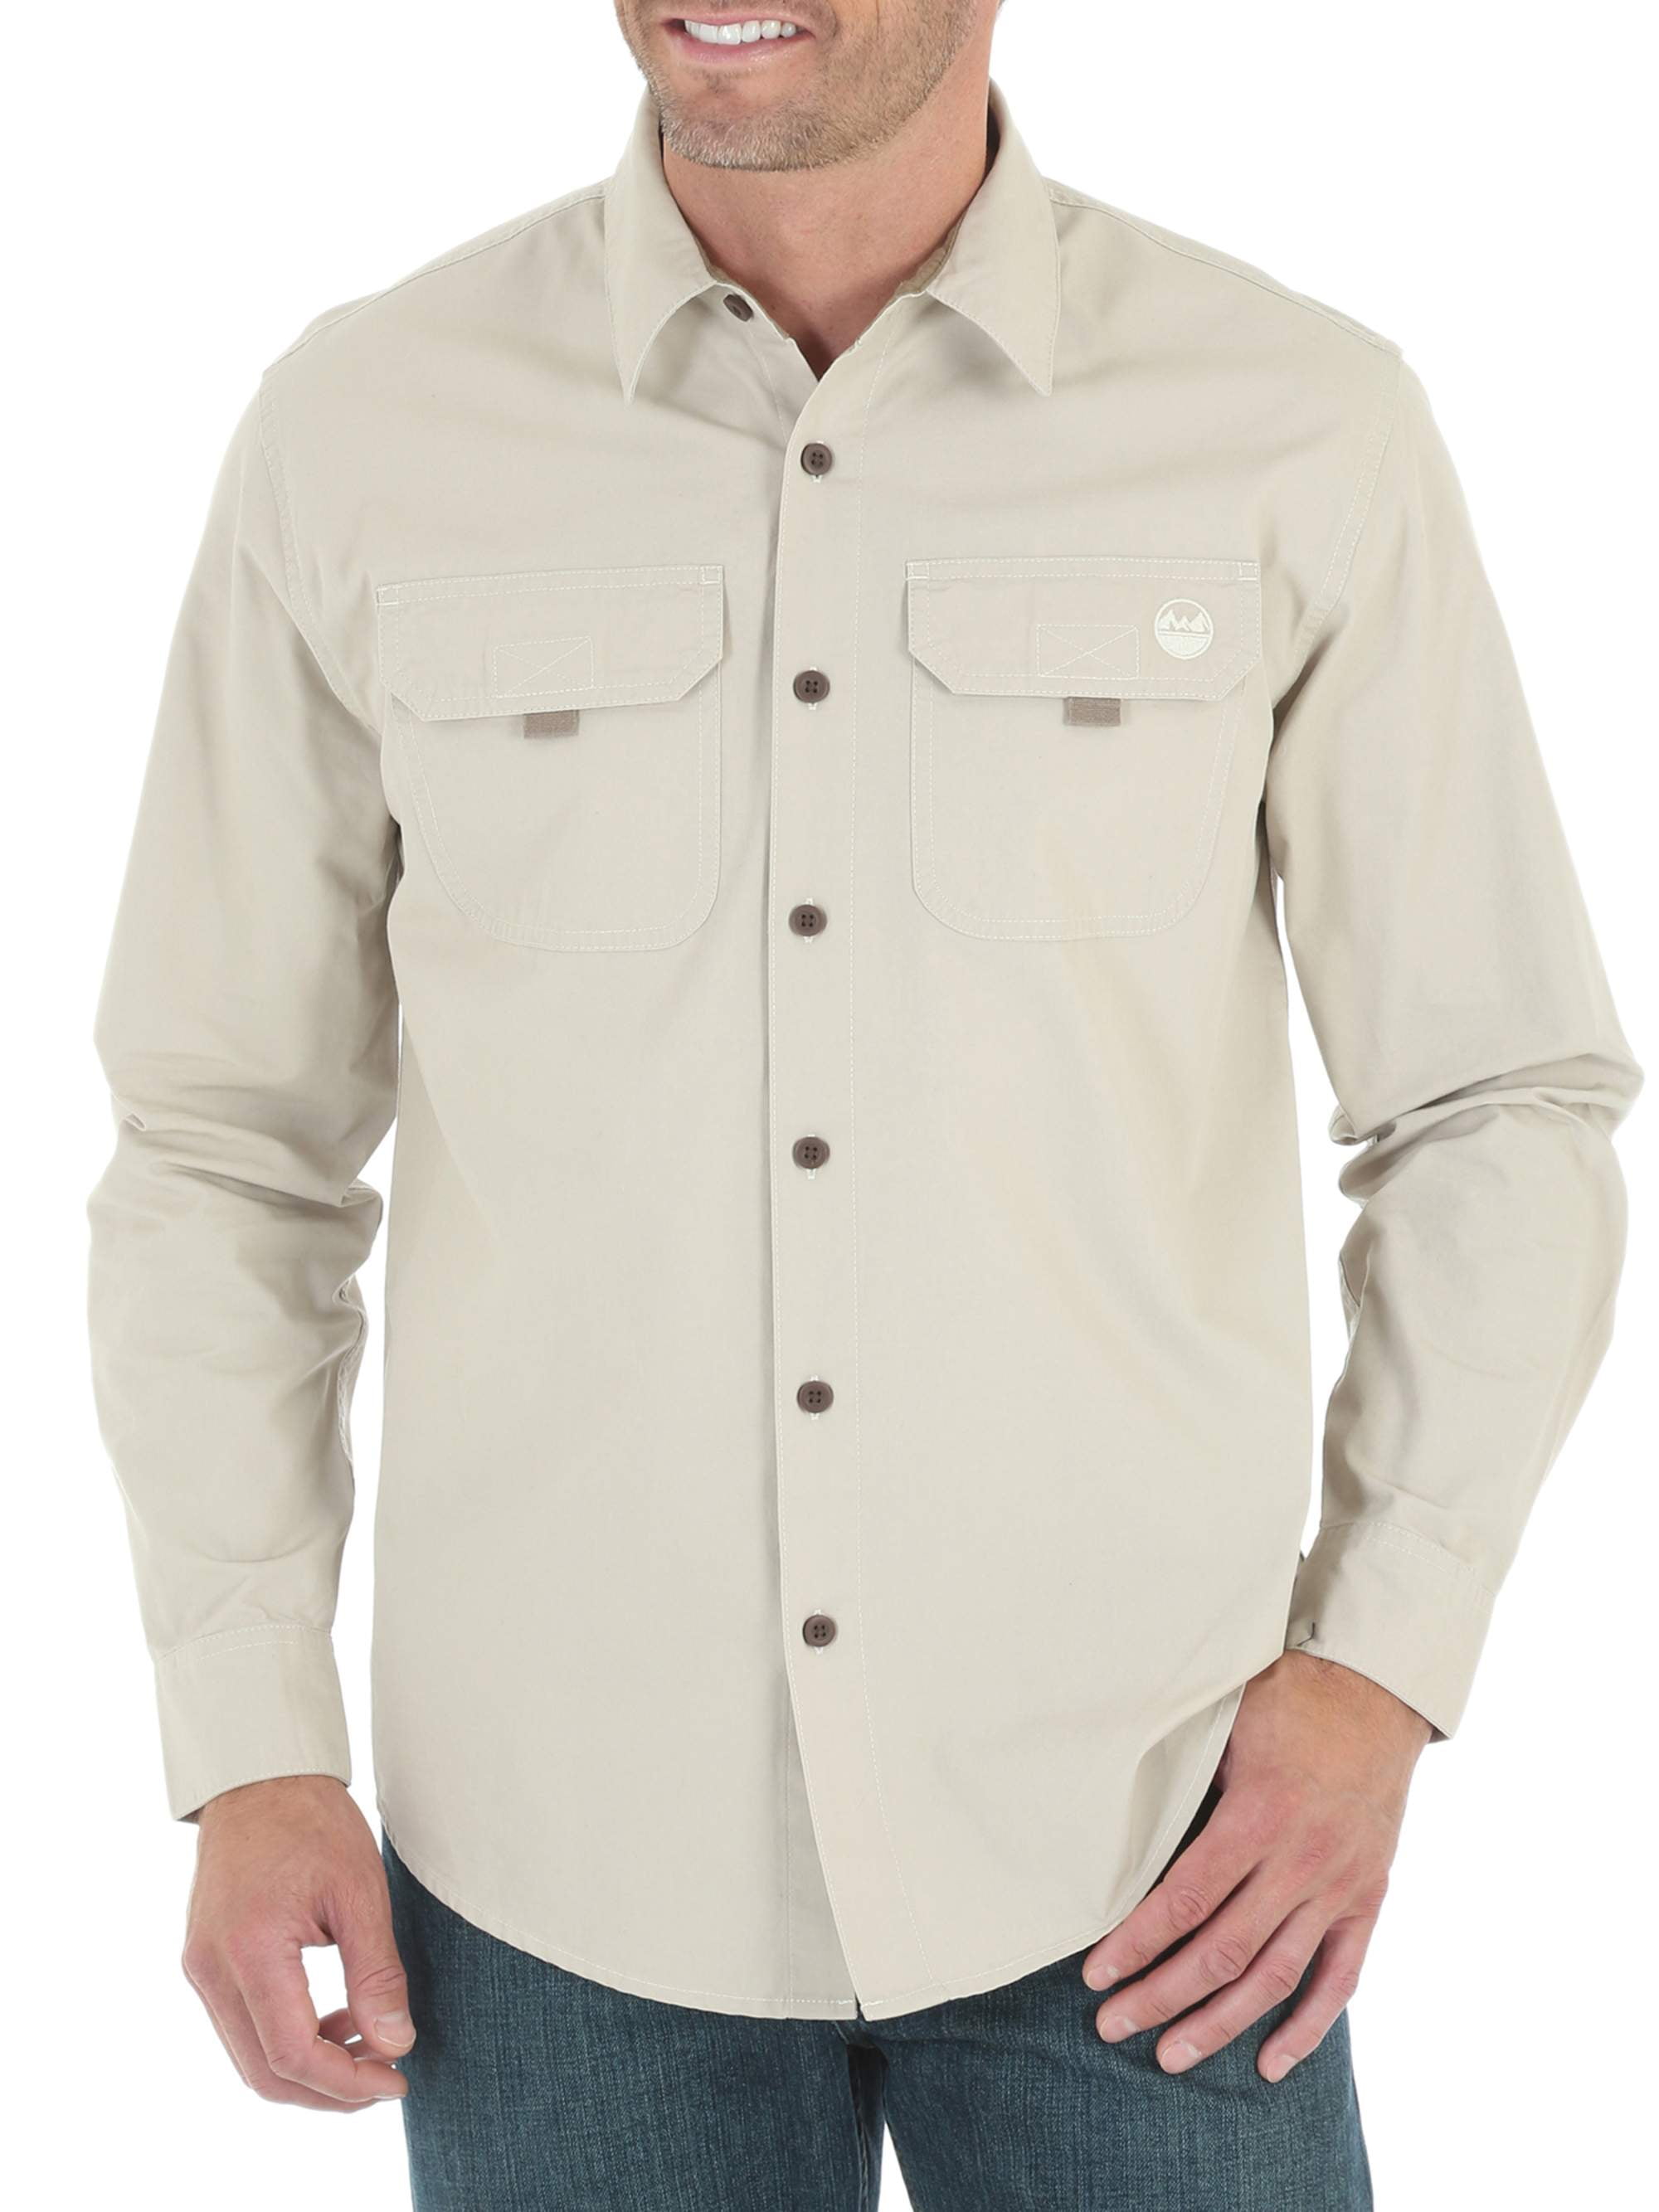 Big Men's Long Sleeve Woven Canvas Shirt - Walmart.com